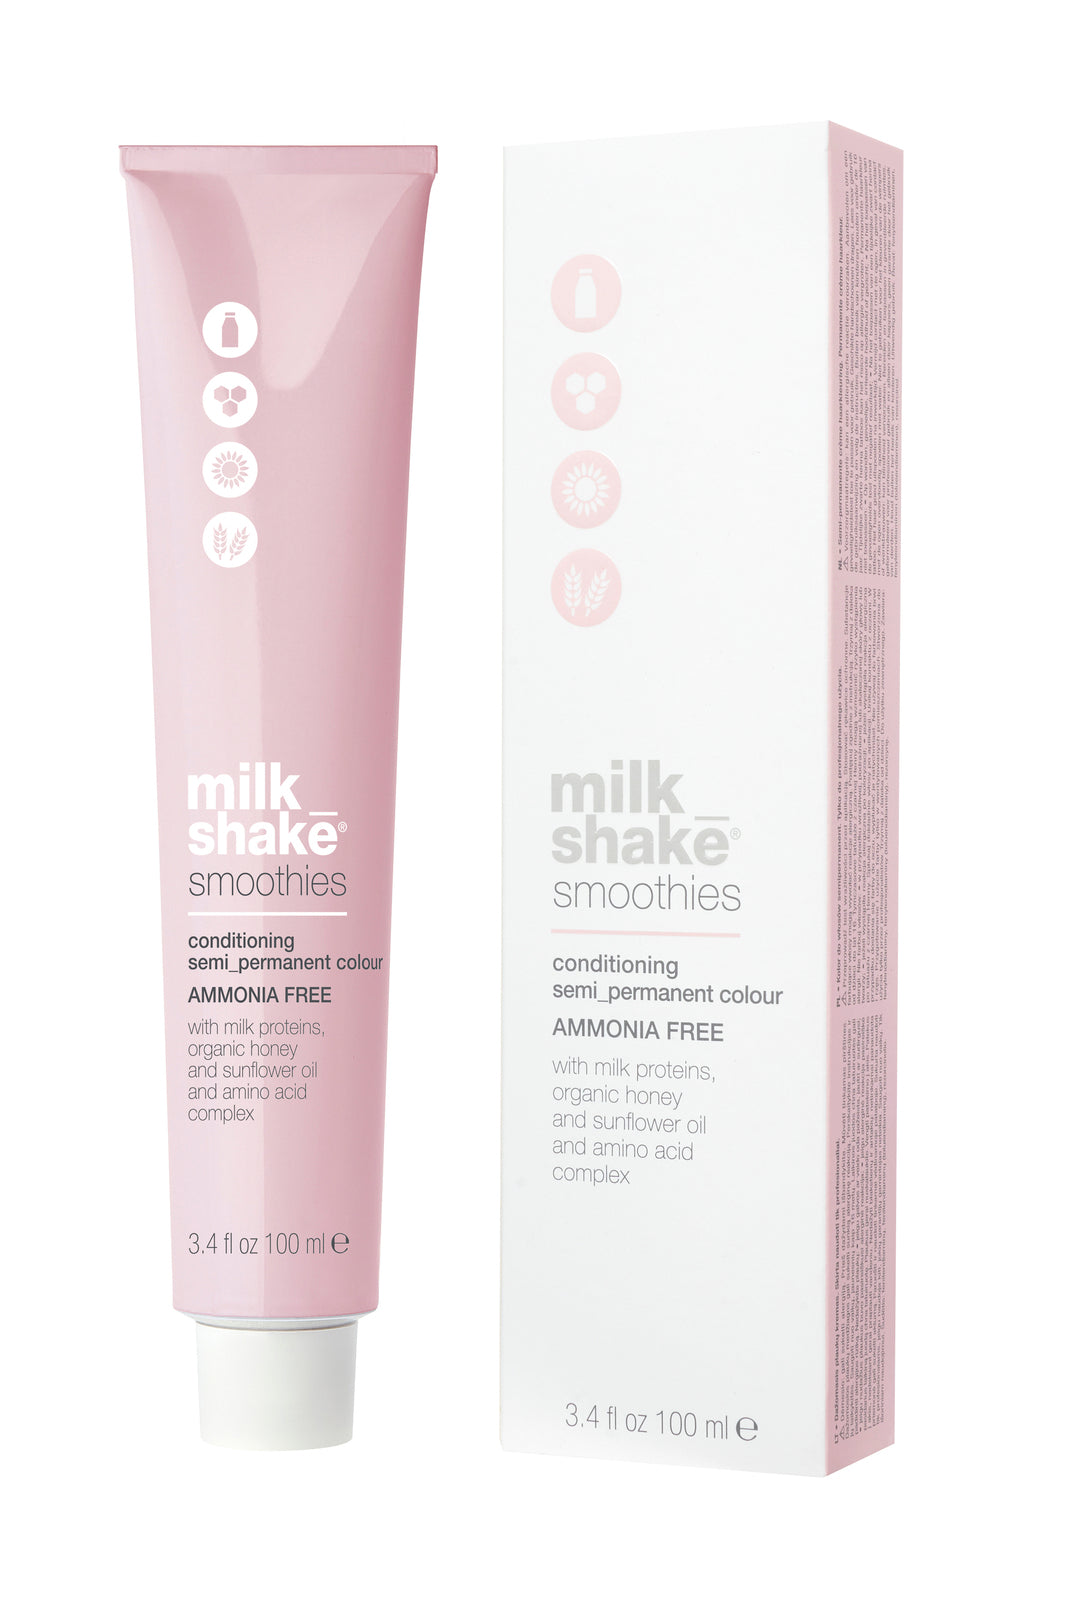 Milkshake smoothies semi-permanent color 10.13